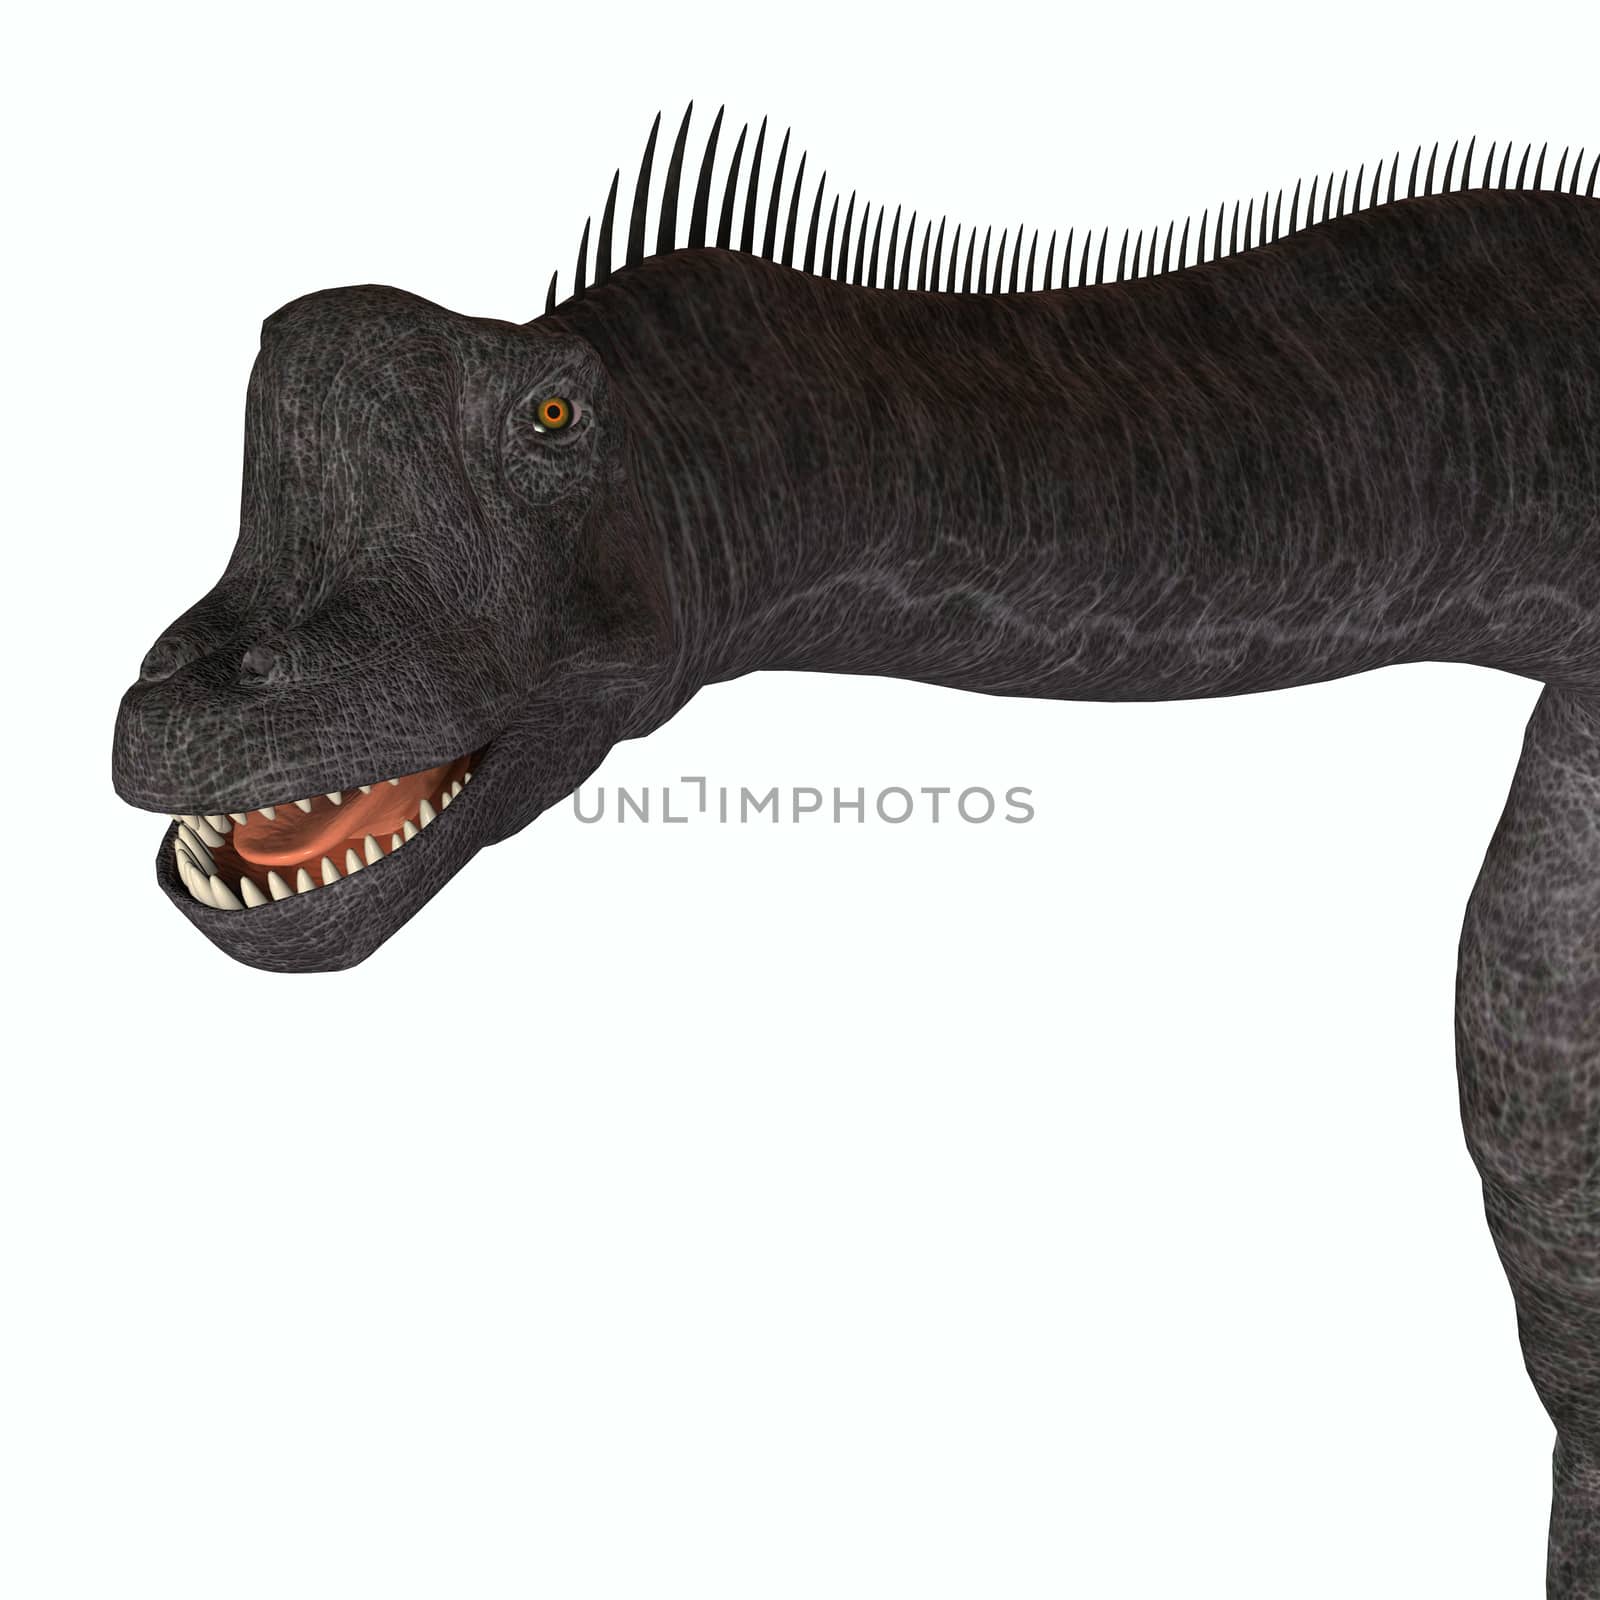 Brachiosaurus Animal Head by Catmando